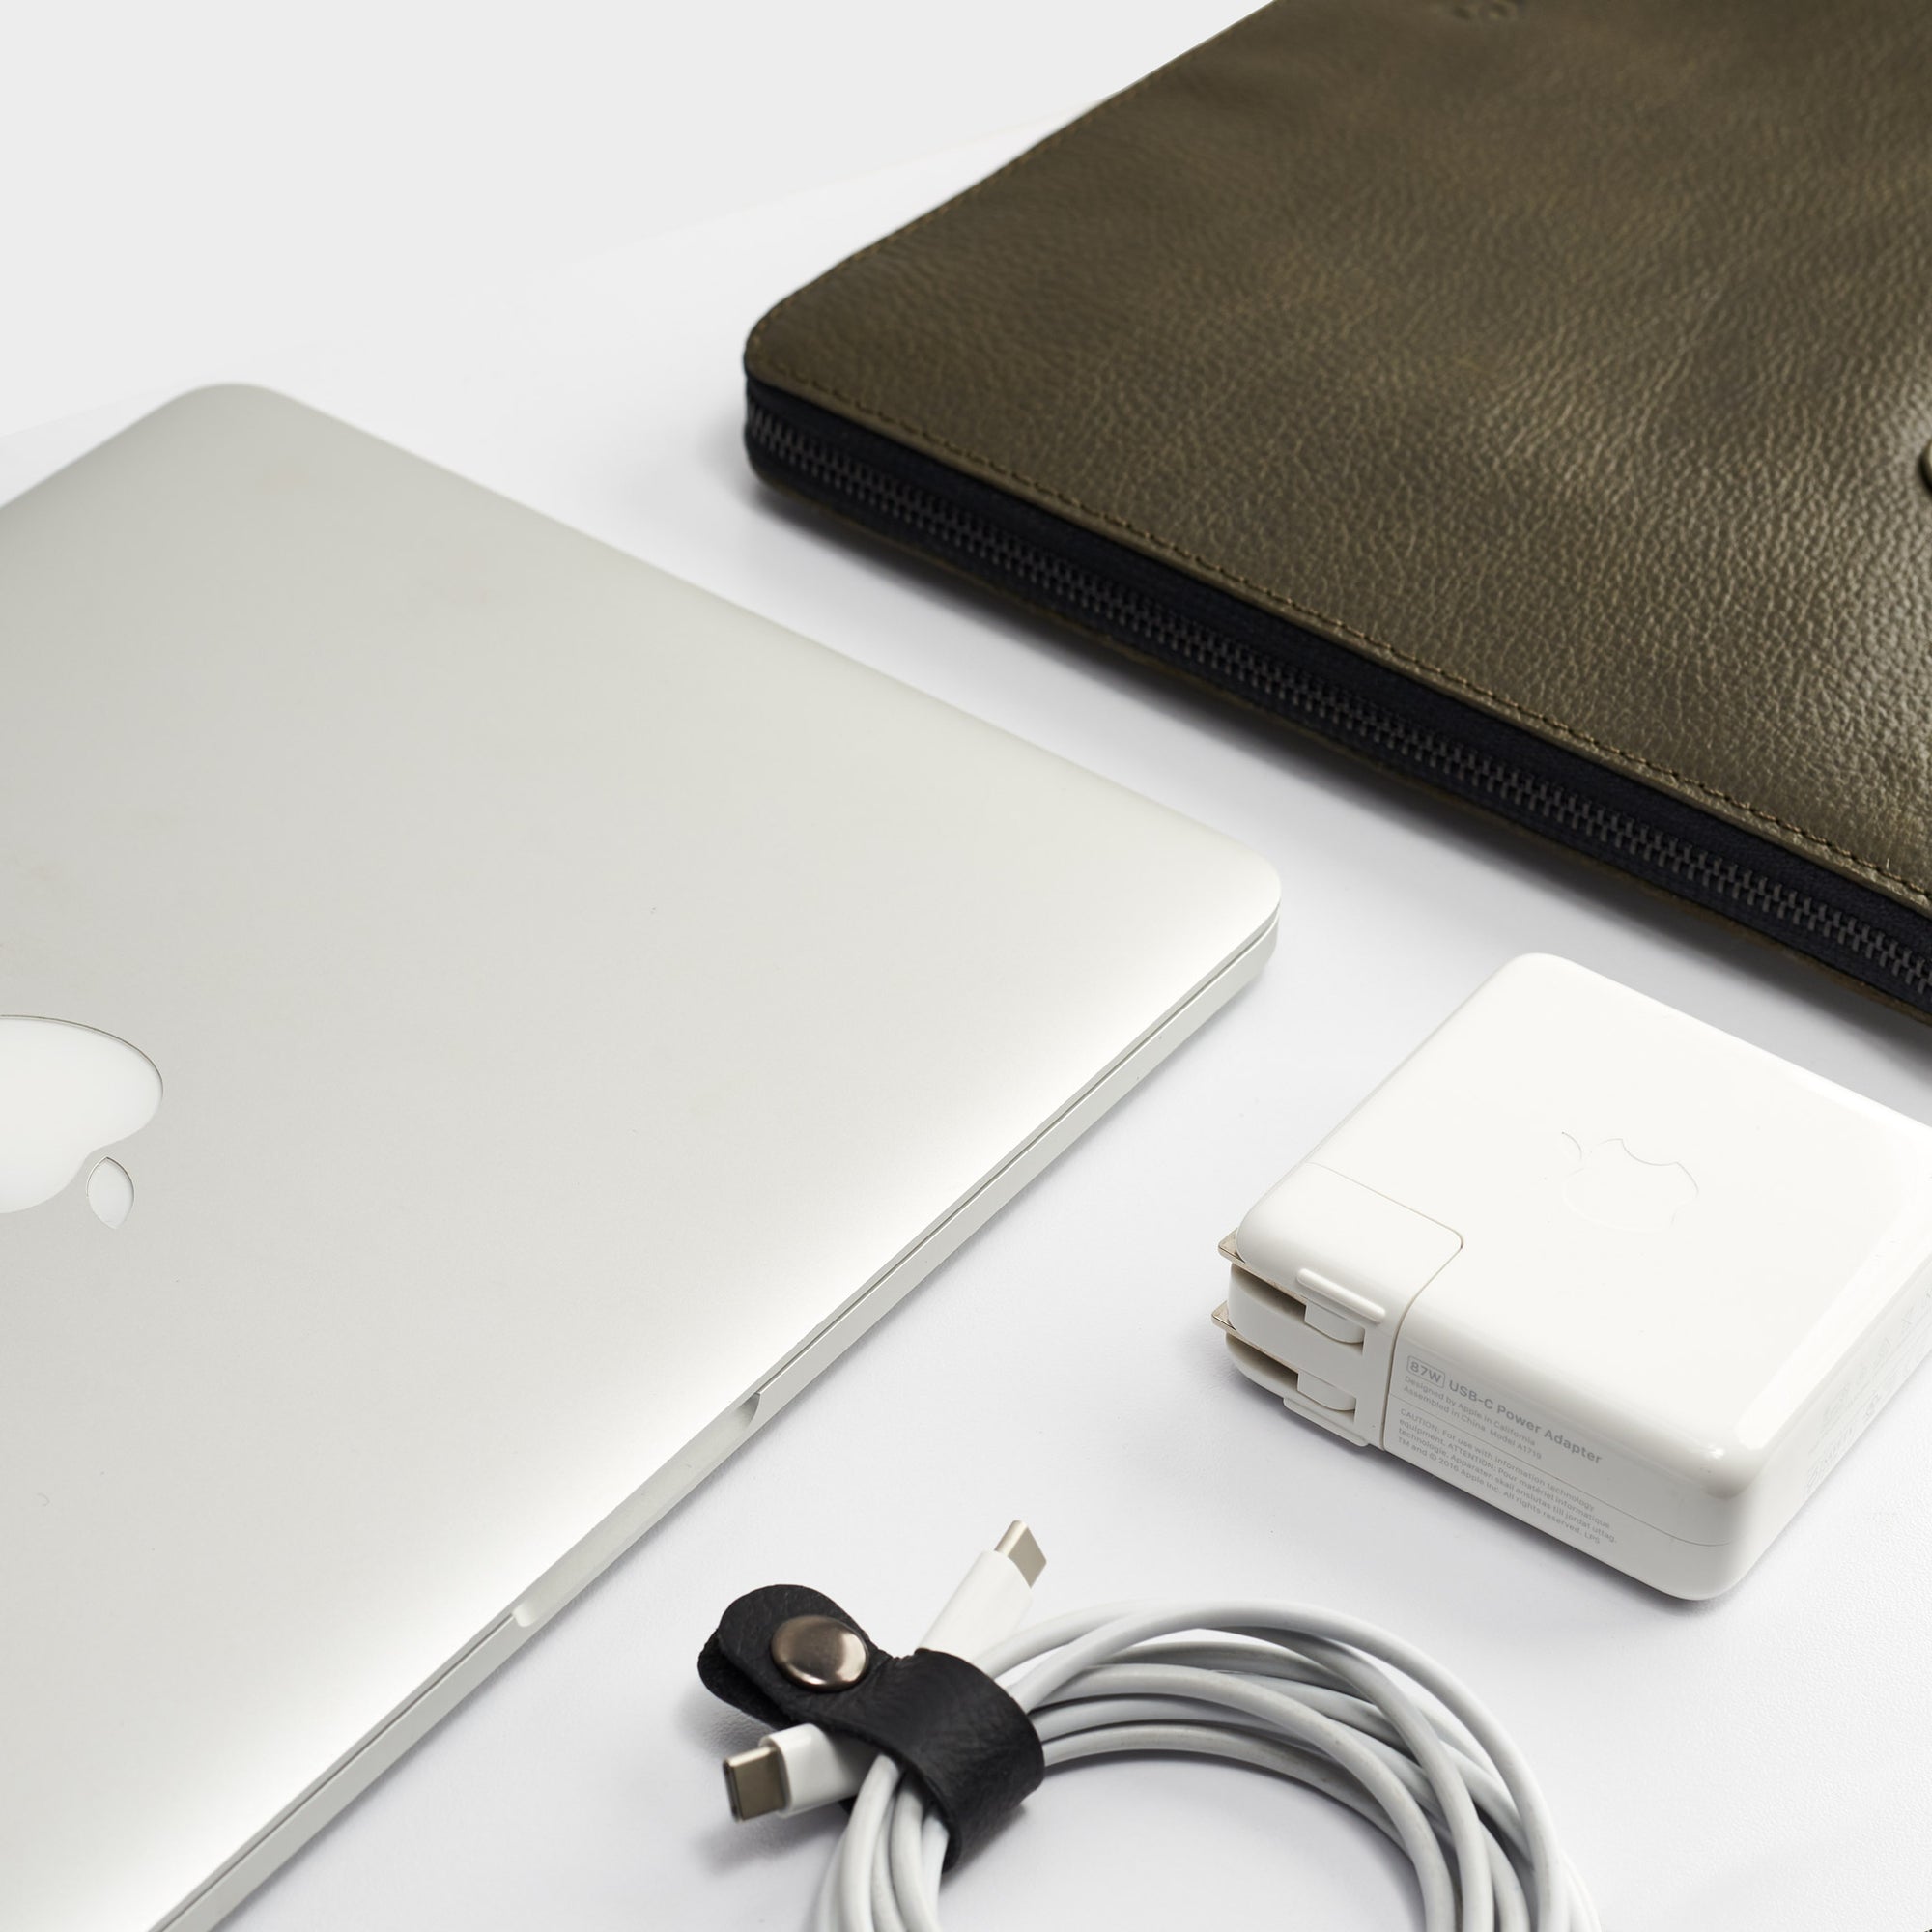 Apple accessories. Green Leather Laptop Portfolio Case. Laptops & devices Bag.